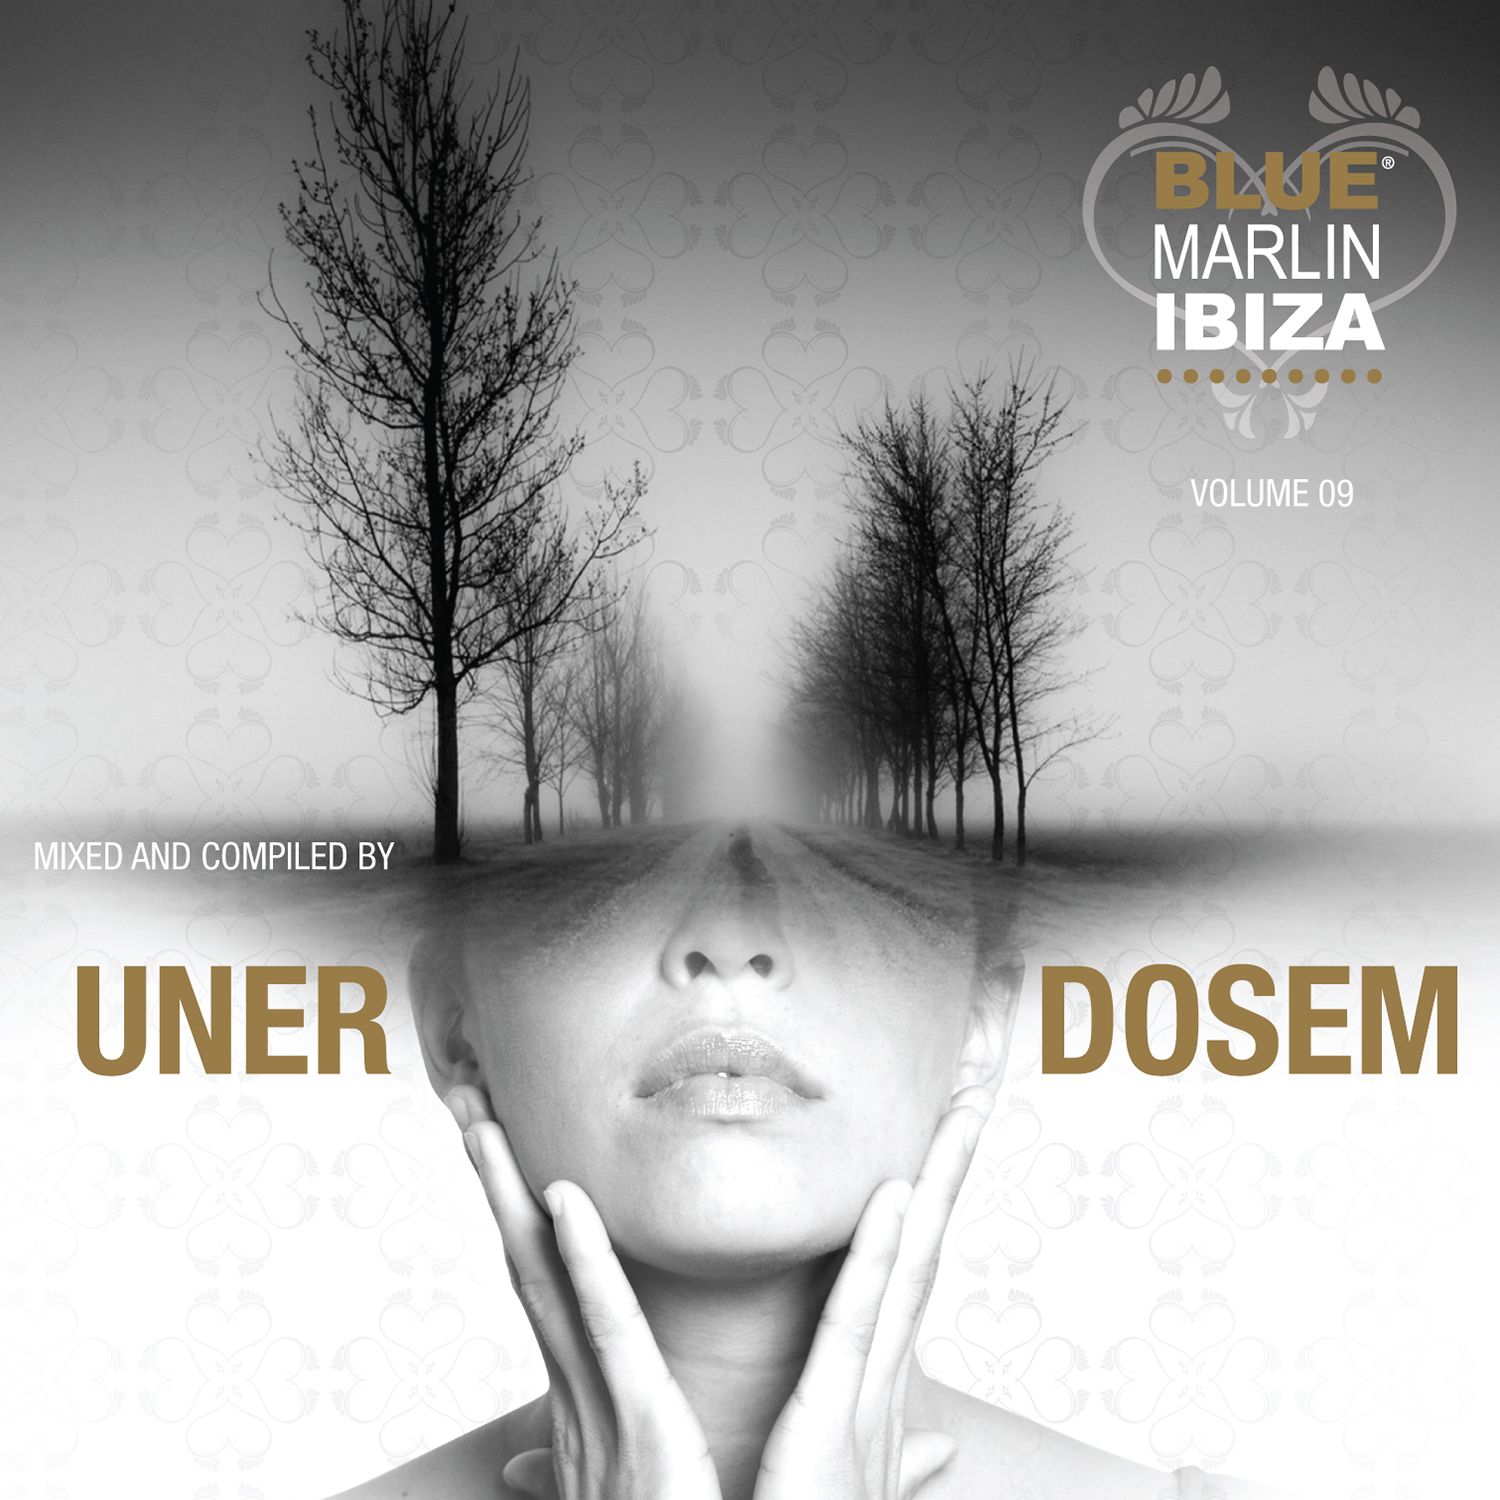 Blue Marlin Ibiza Volume 09 Dosem Mix